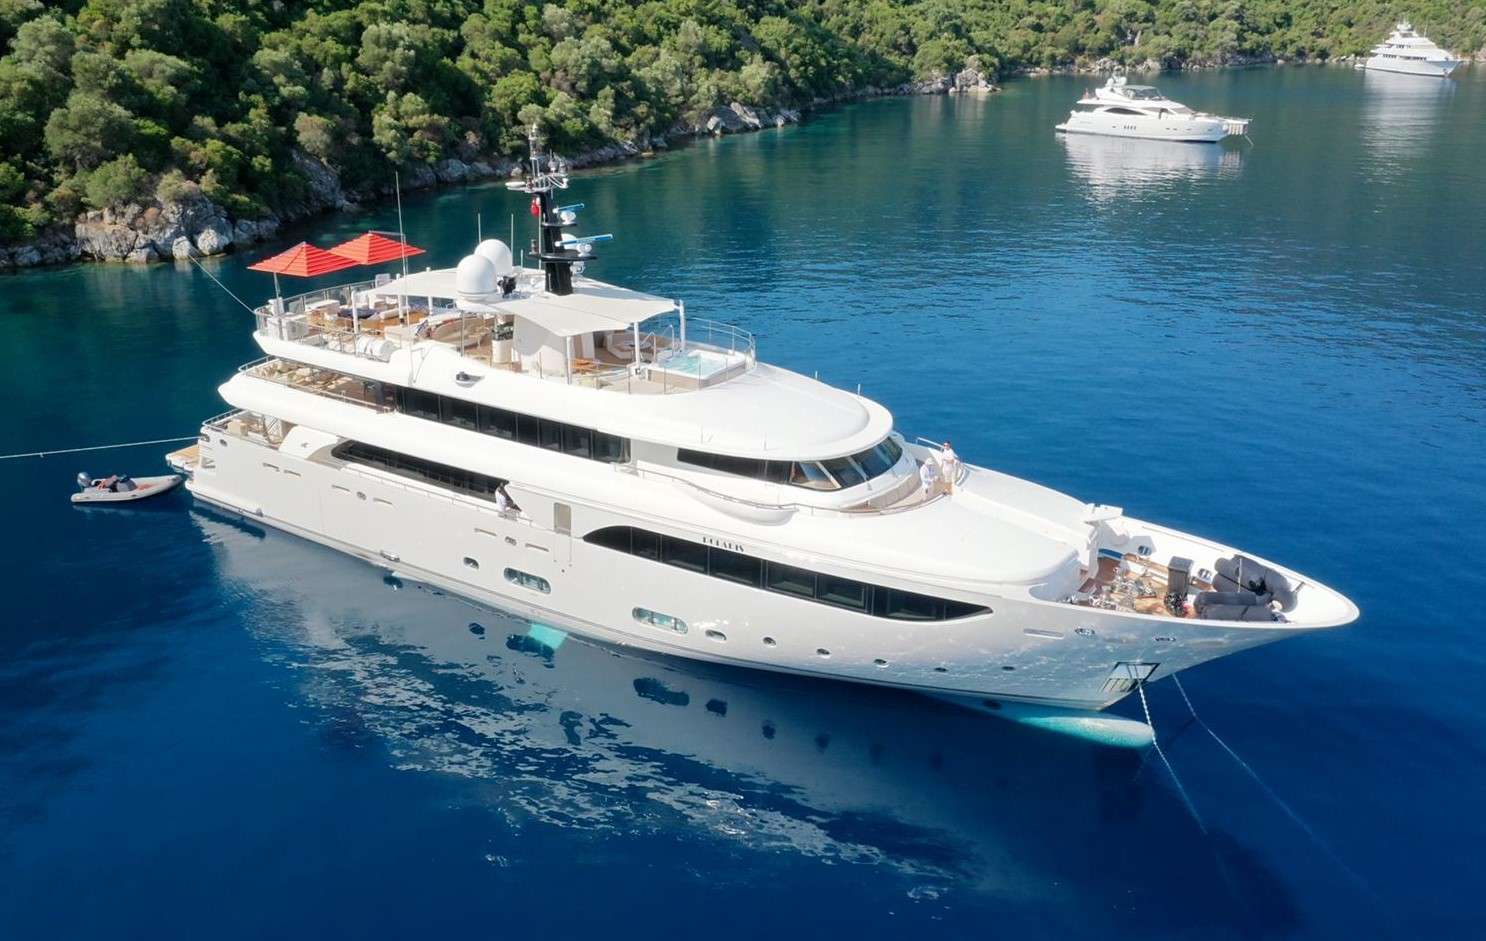 POLARIS - Yacht Charter Fethiye & Boat hire in Croatia, Greece, Turkey 1